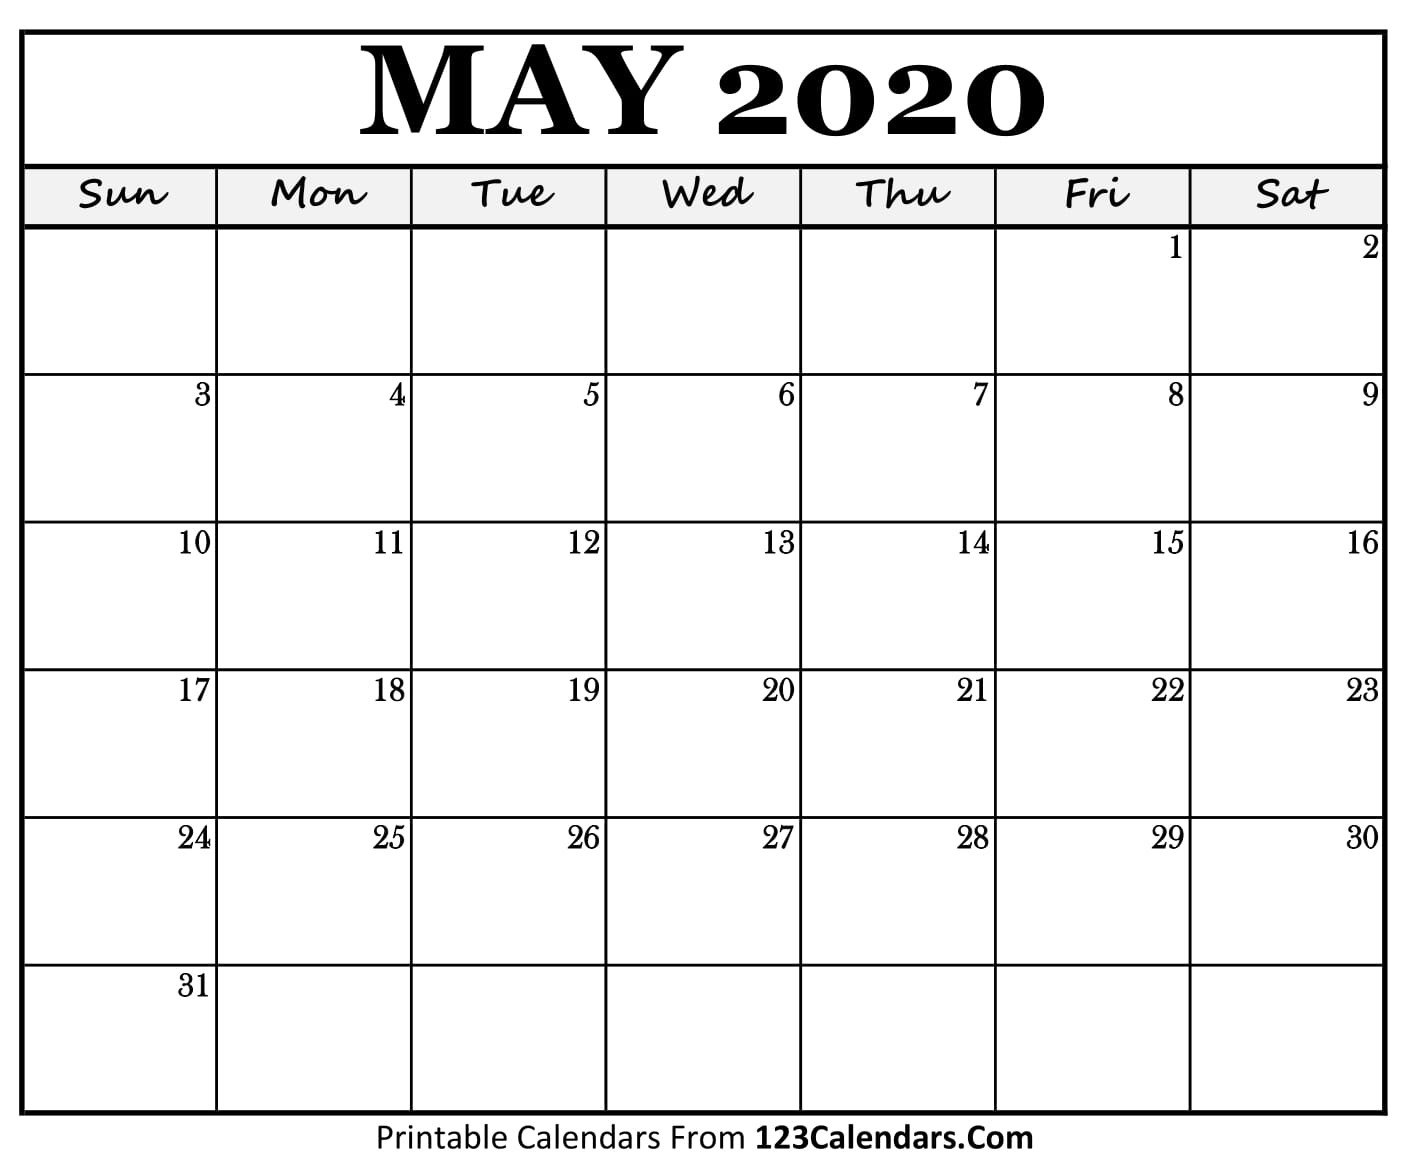 May 2020 Printable Calendar | 123Calendars-Calendar Summer 2020 Blank